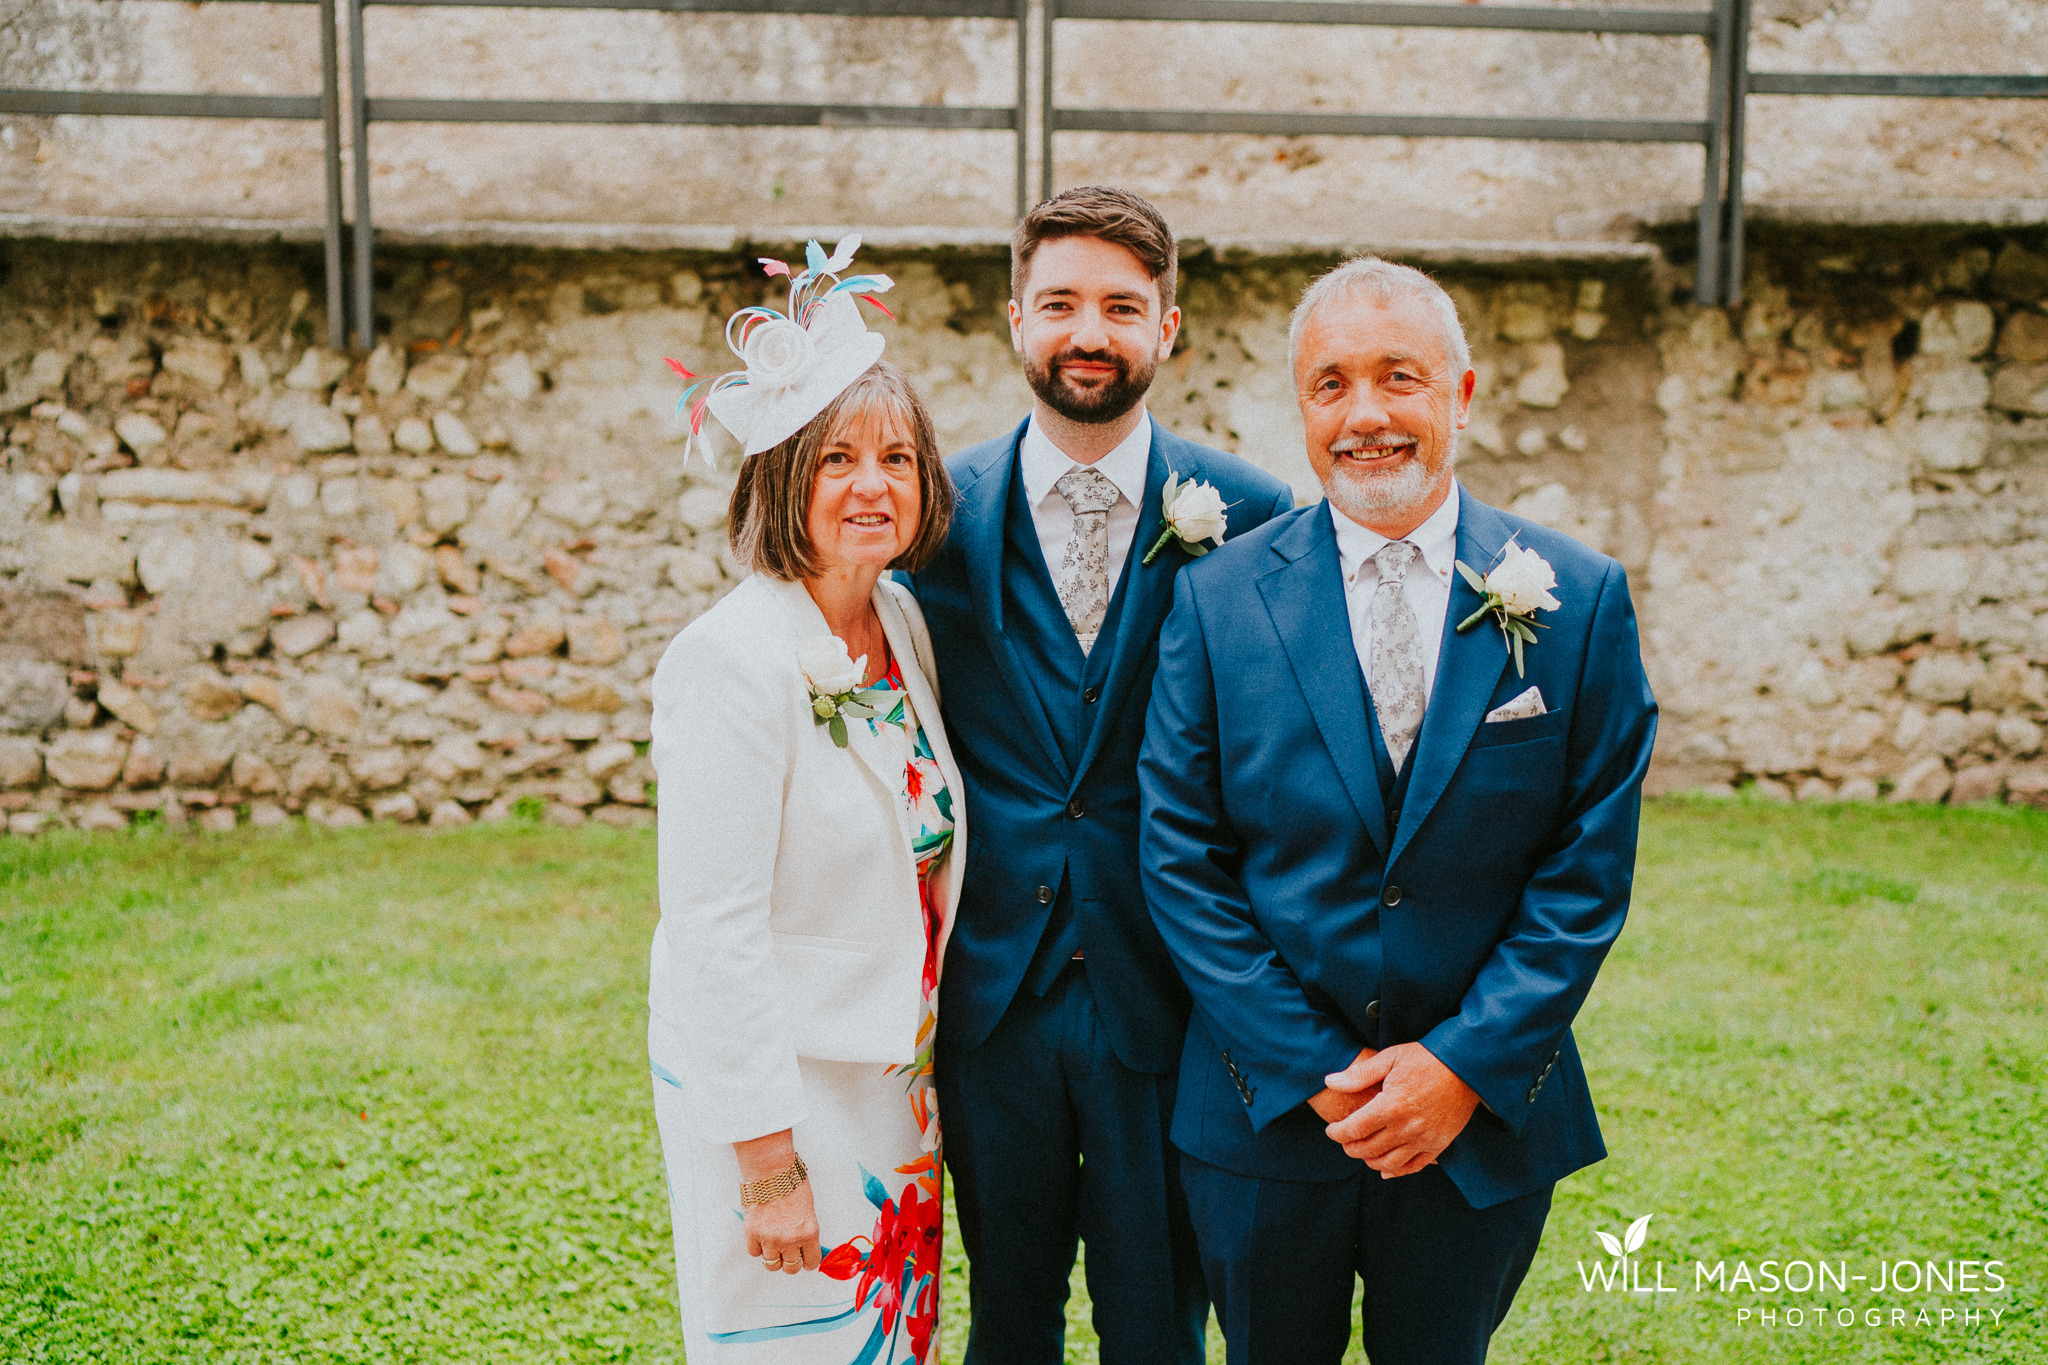  family group photography malcesine castle wedding 